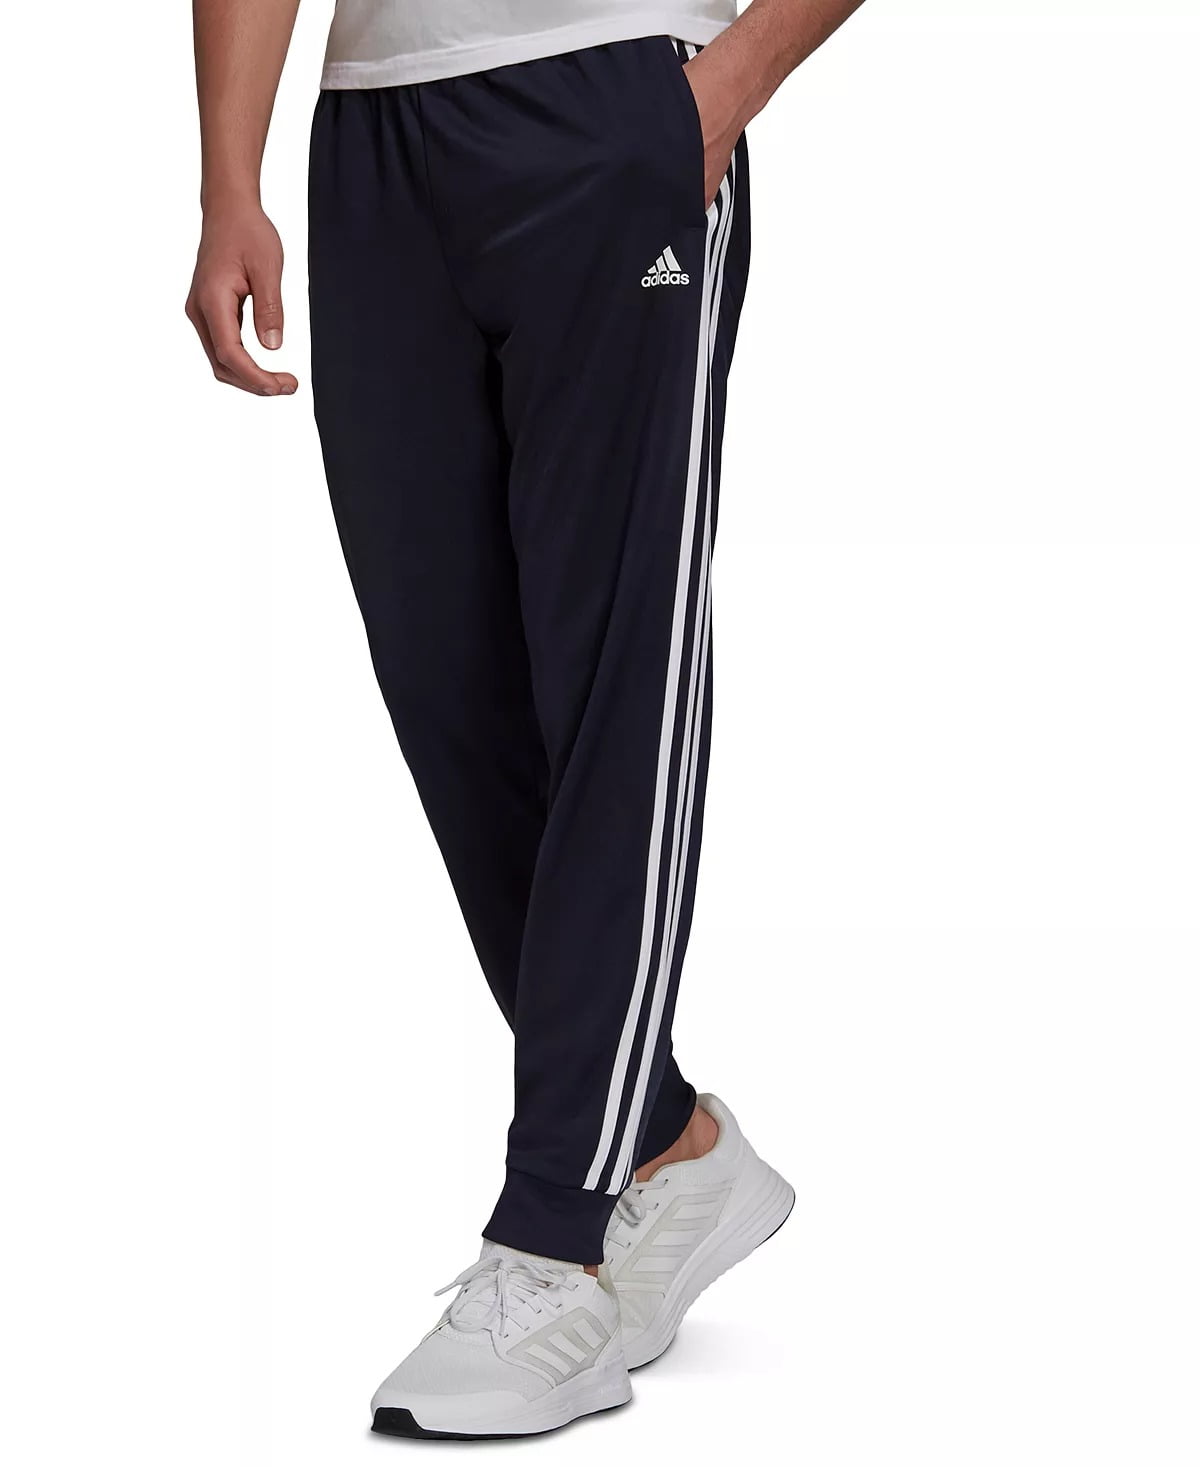 Adidas LEGEND INK/WHITE Men's Tricot Jogger Pants, US Large